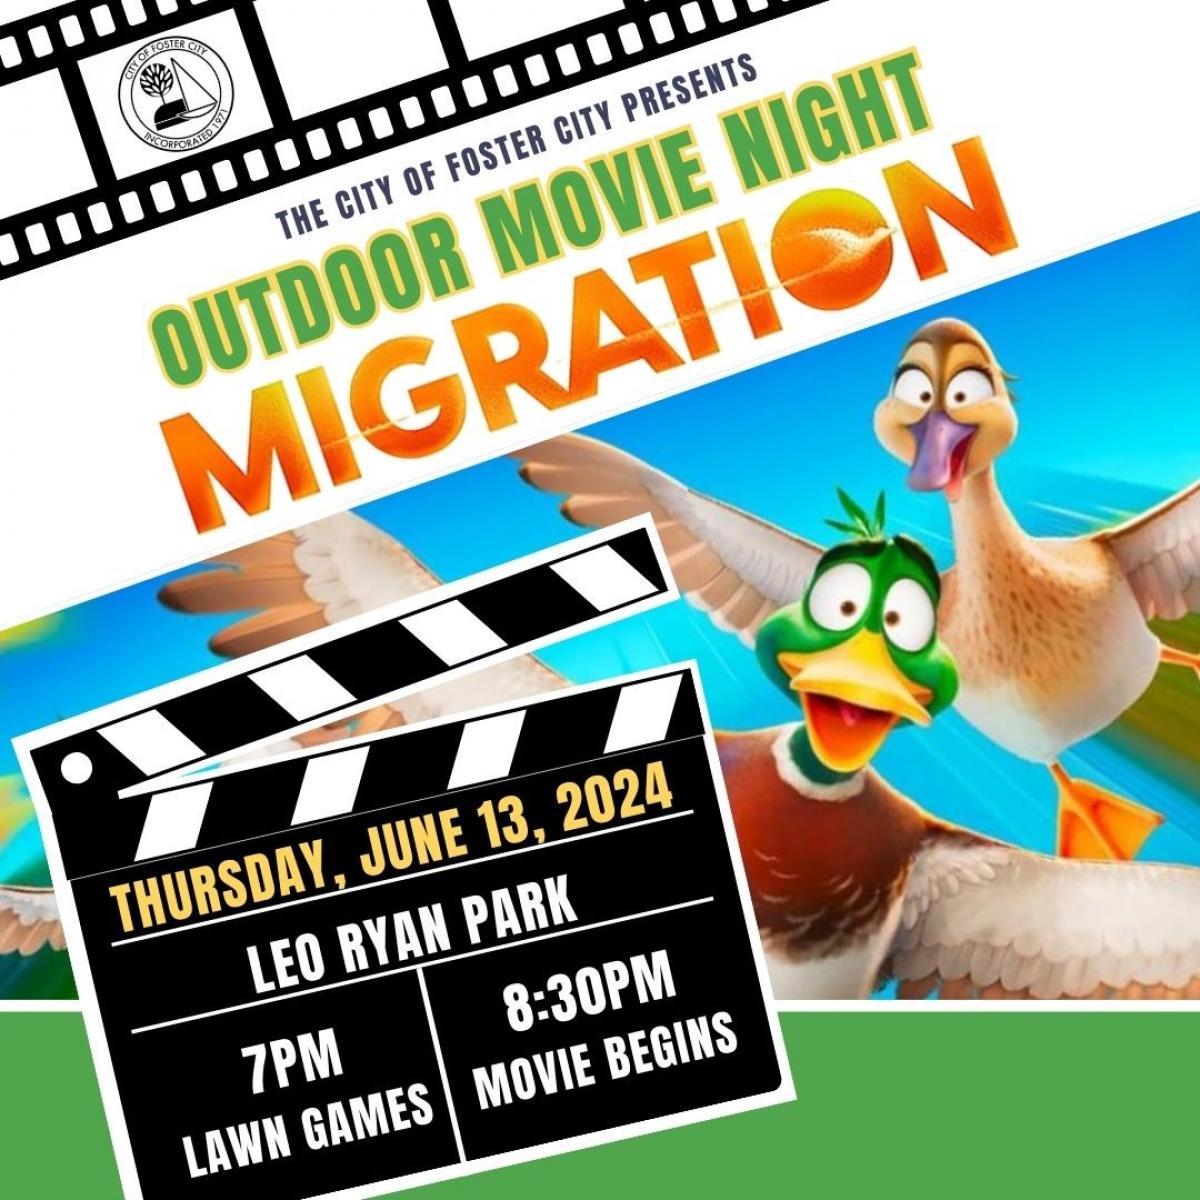 Outdoor Movie Night: Migration